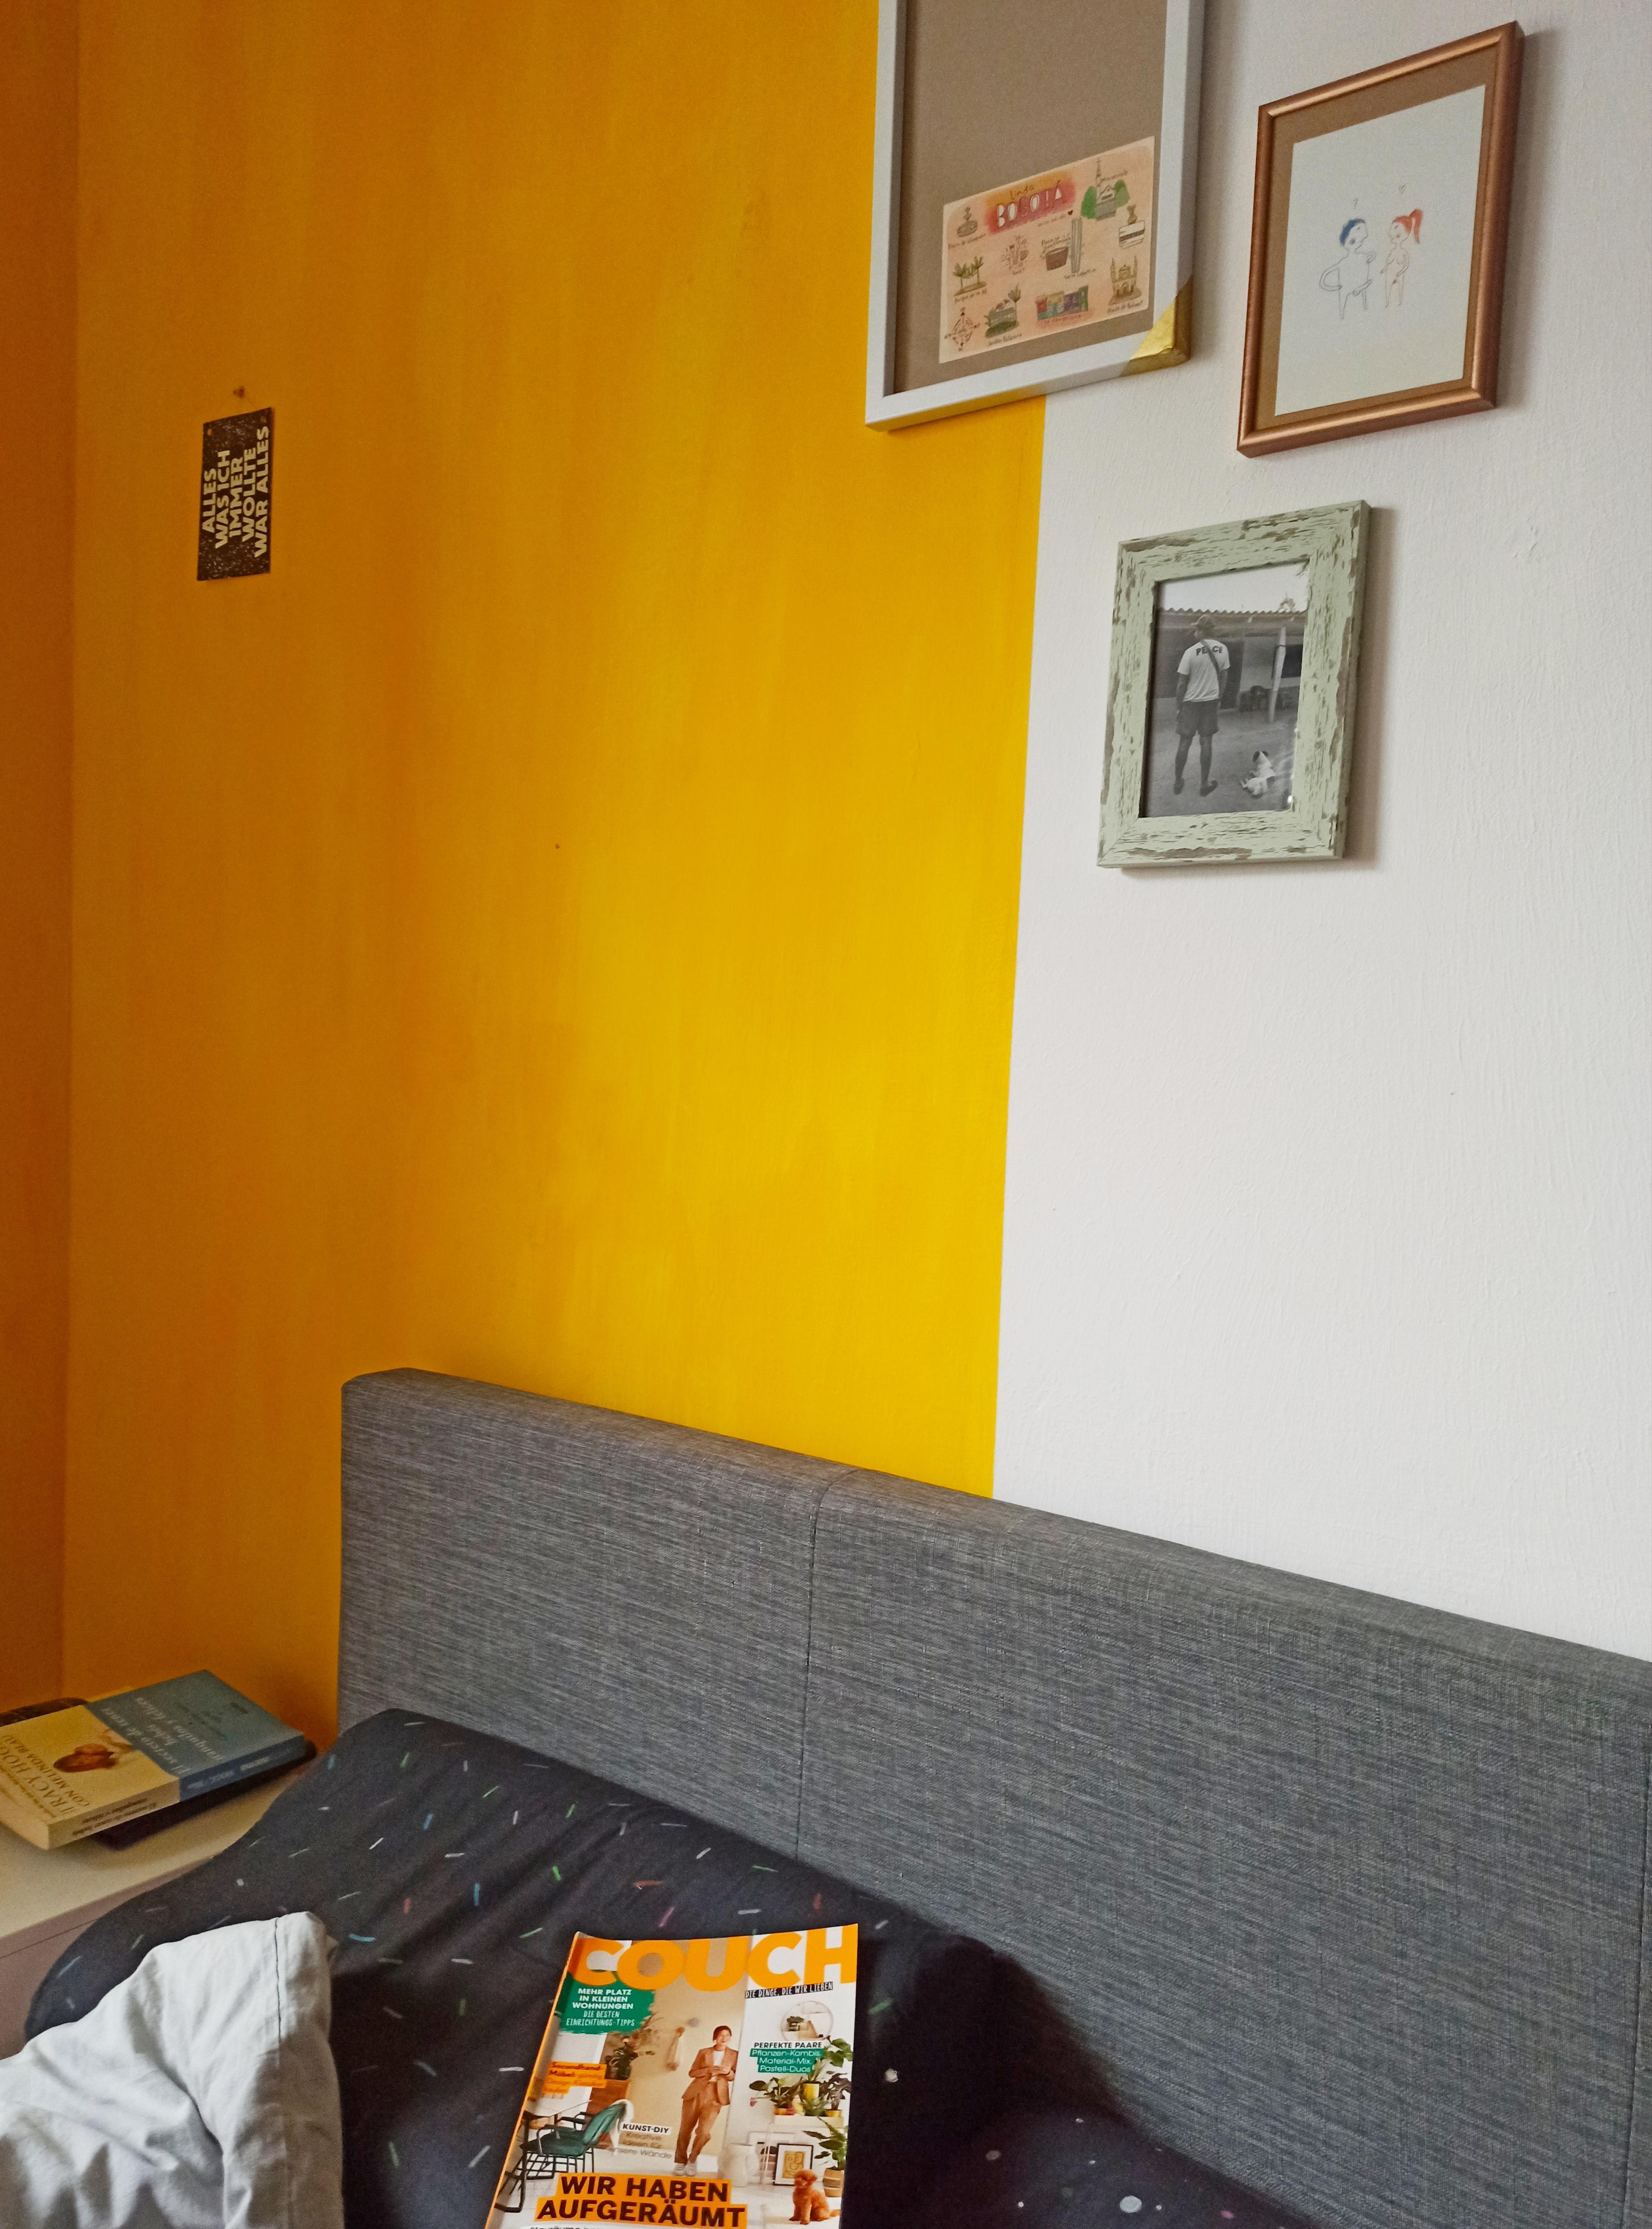 Sonne an der Wand
#diy #wandfarbe #schlafzimmer #wandgestaltung